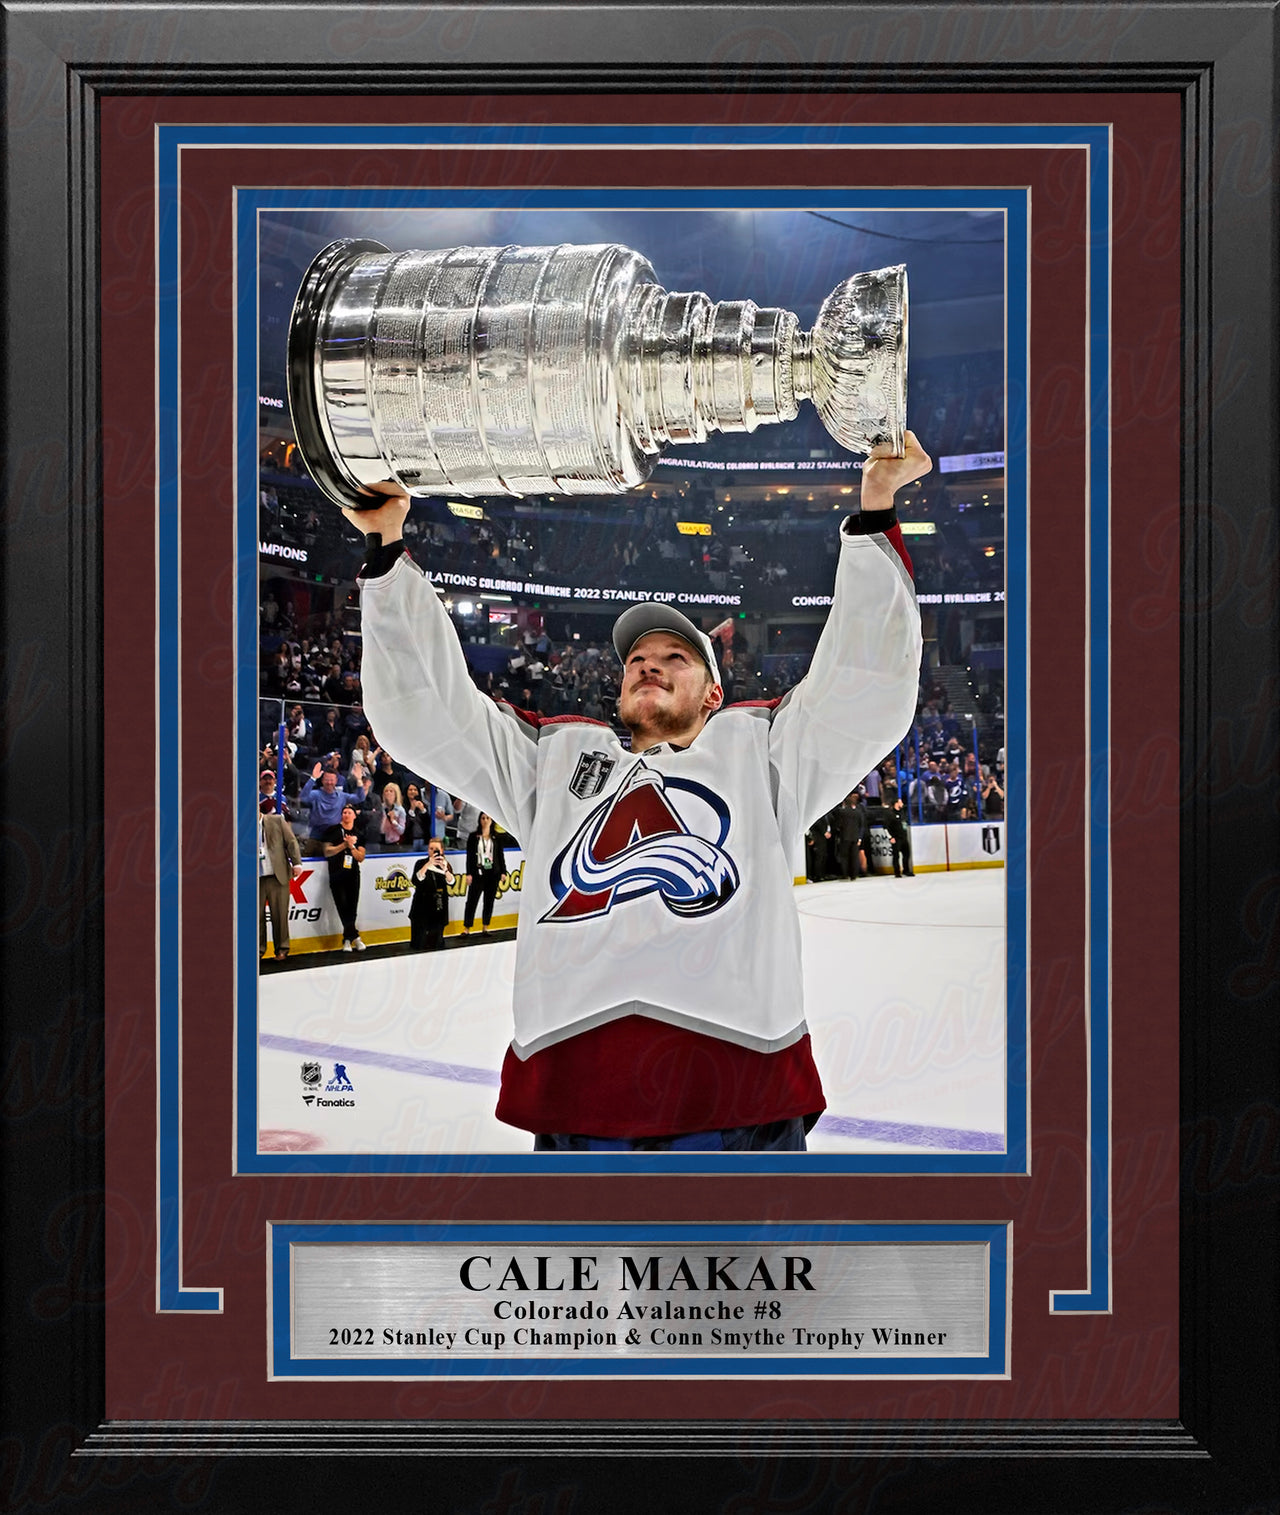 Cale Makar 2022 Stanley Cup Colorado Avalanche 8" x 10" Framed Hockey Photo - Dynasty Sports & Framing 